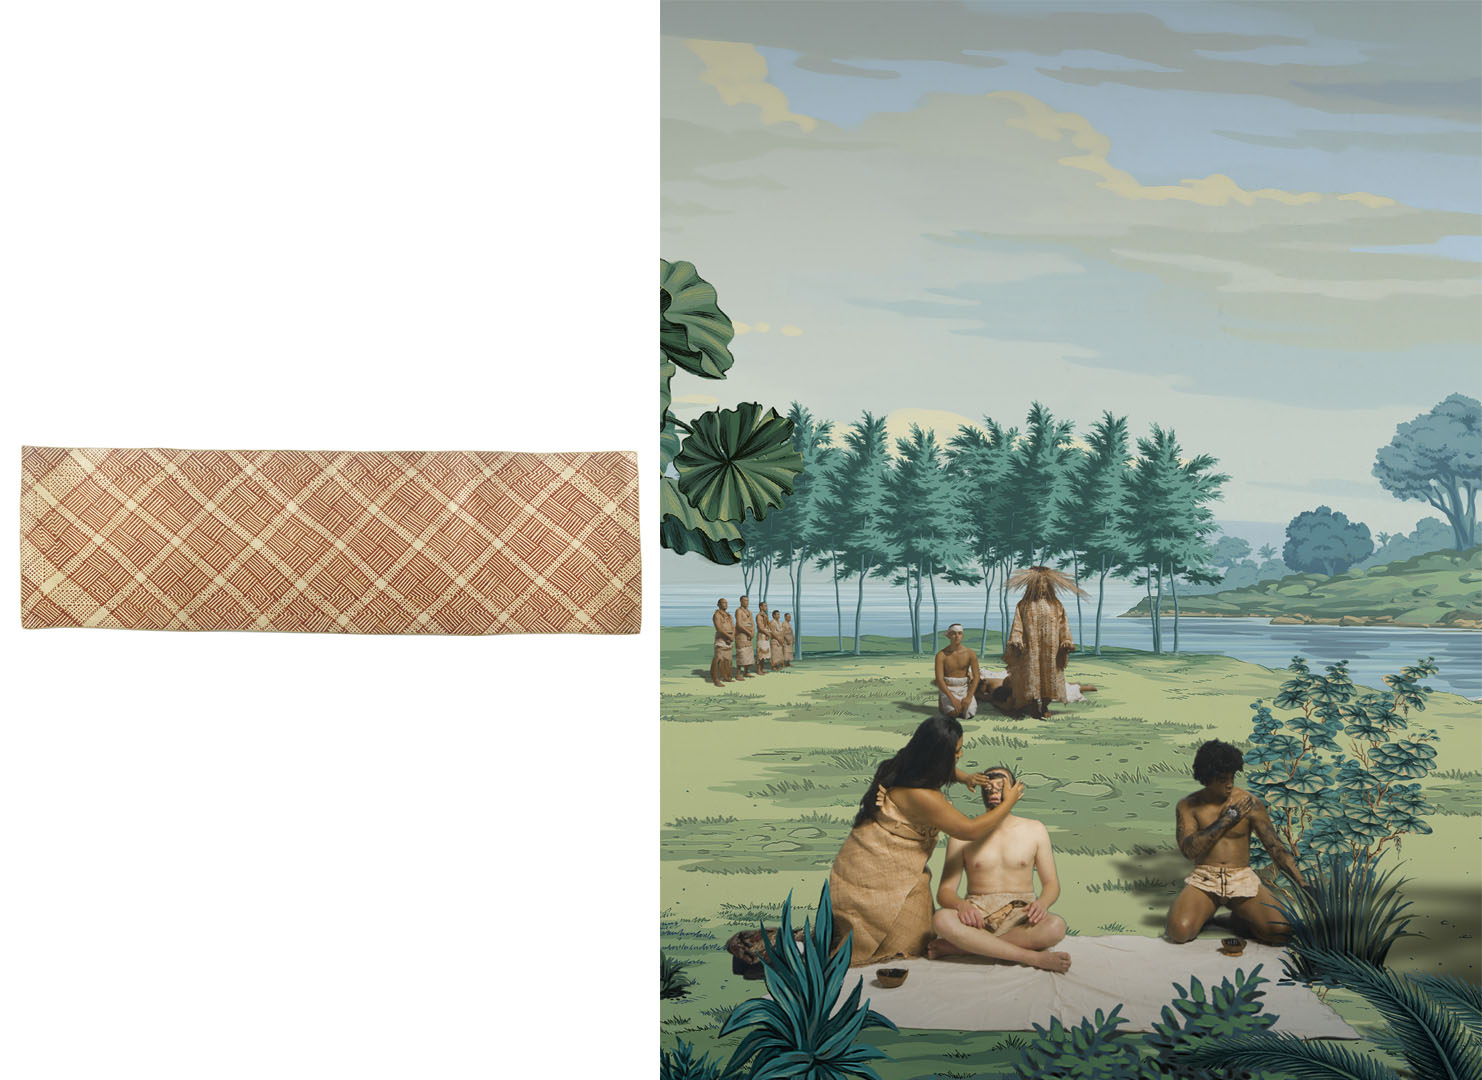 A woven sleeping mat collected by Captain Cook next to a still from Lisa Reihana's work that features a similar sleeping mat